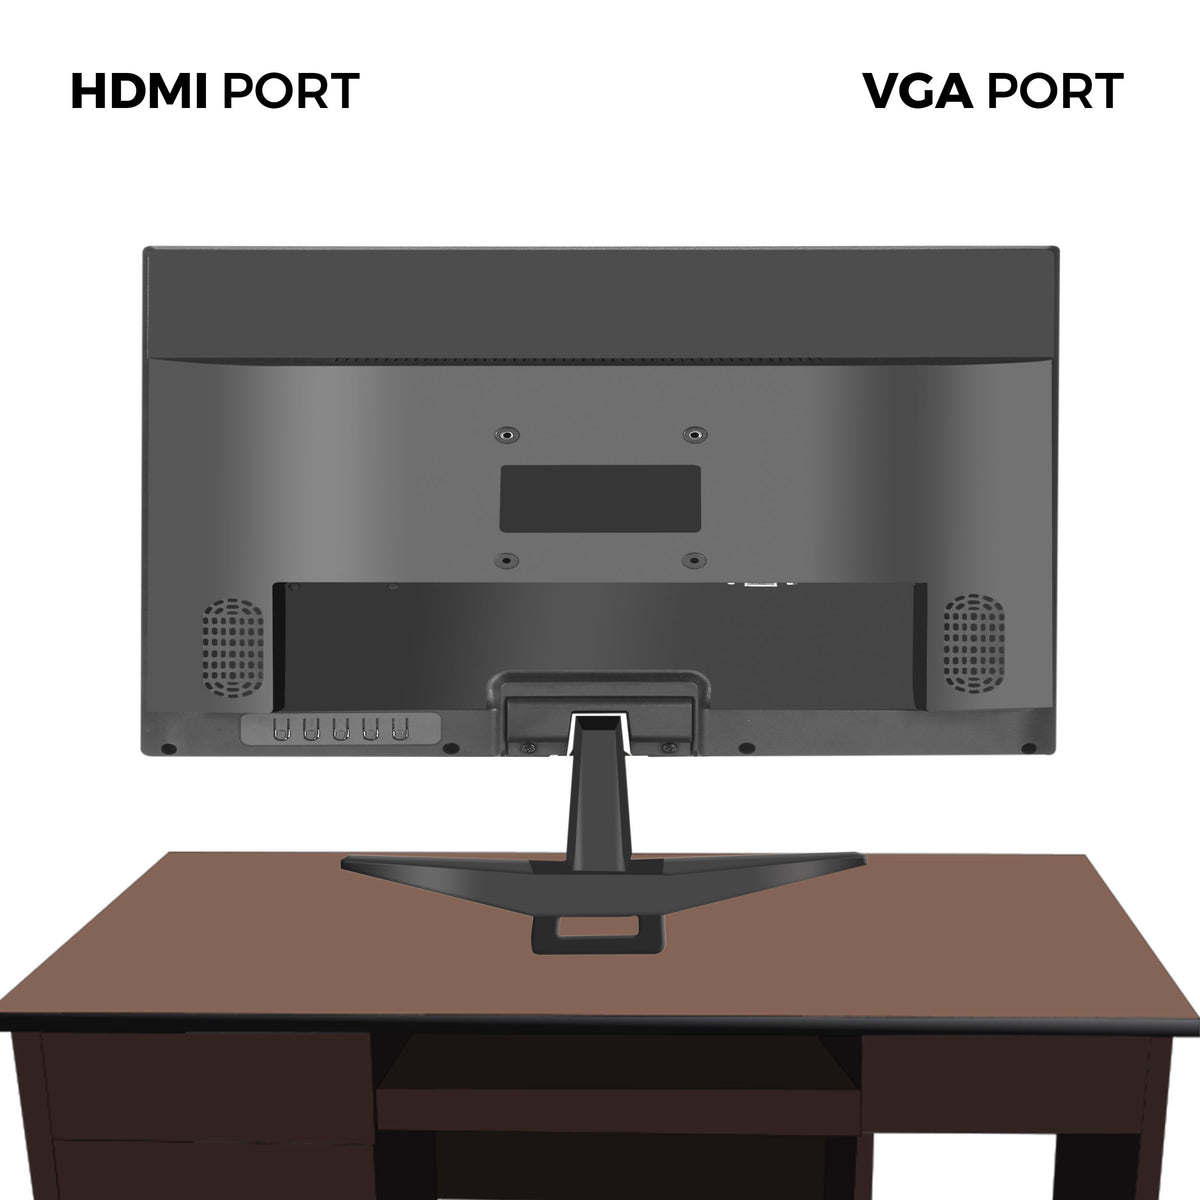 Foxin FM 19 LED HDMI Glaze Black HD Computer Monitor - 18.5 Inch, VESA Mountable with VGA and HDMI Ports